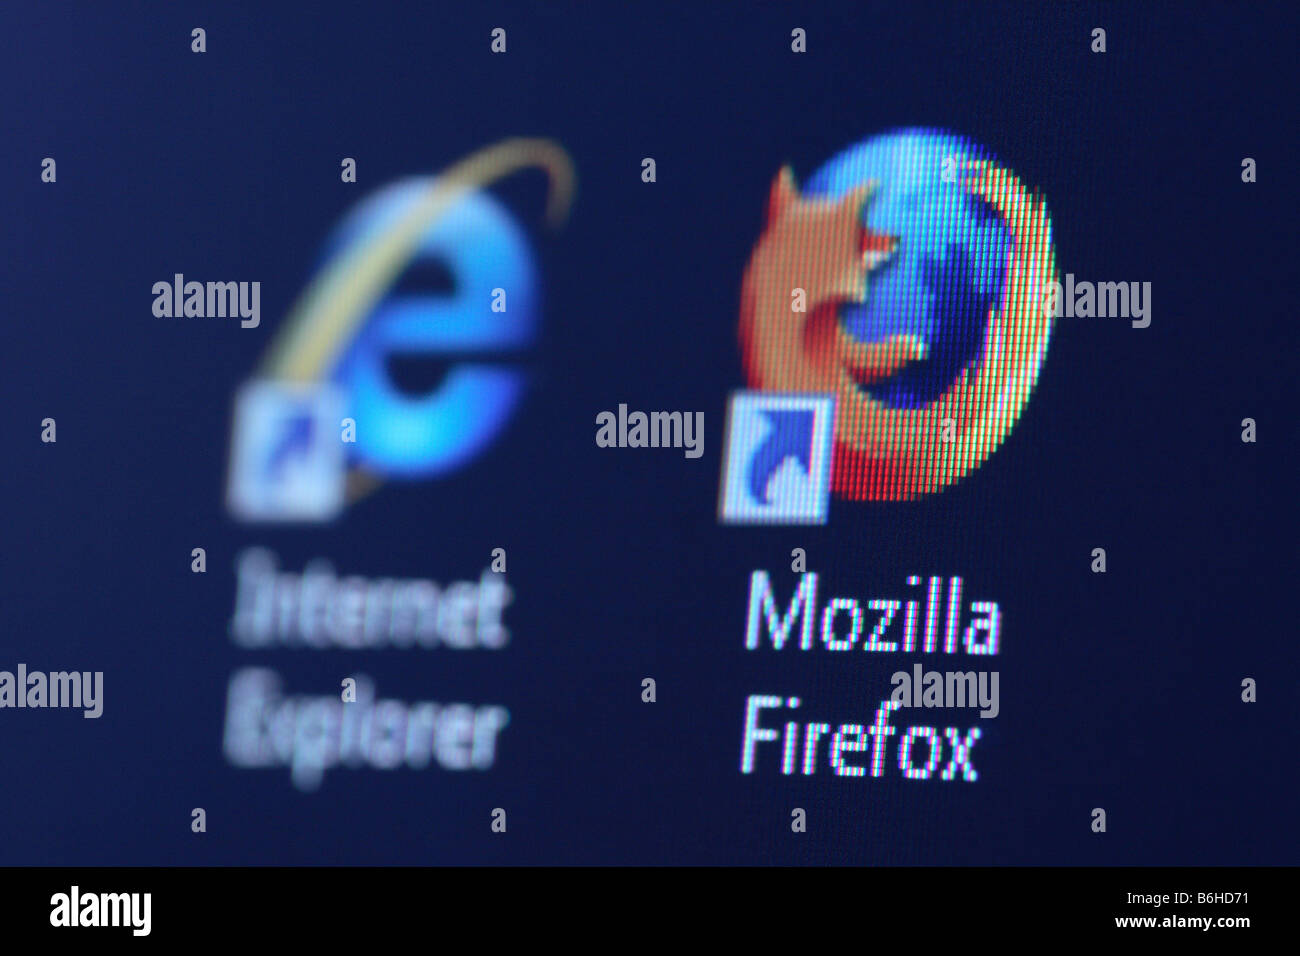 Mozilla Firefox  web browser software icon alongisde the rival Microsoft Internet Explorer IE web browser icon Stock Photo